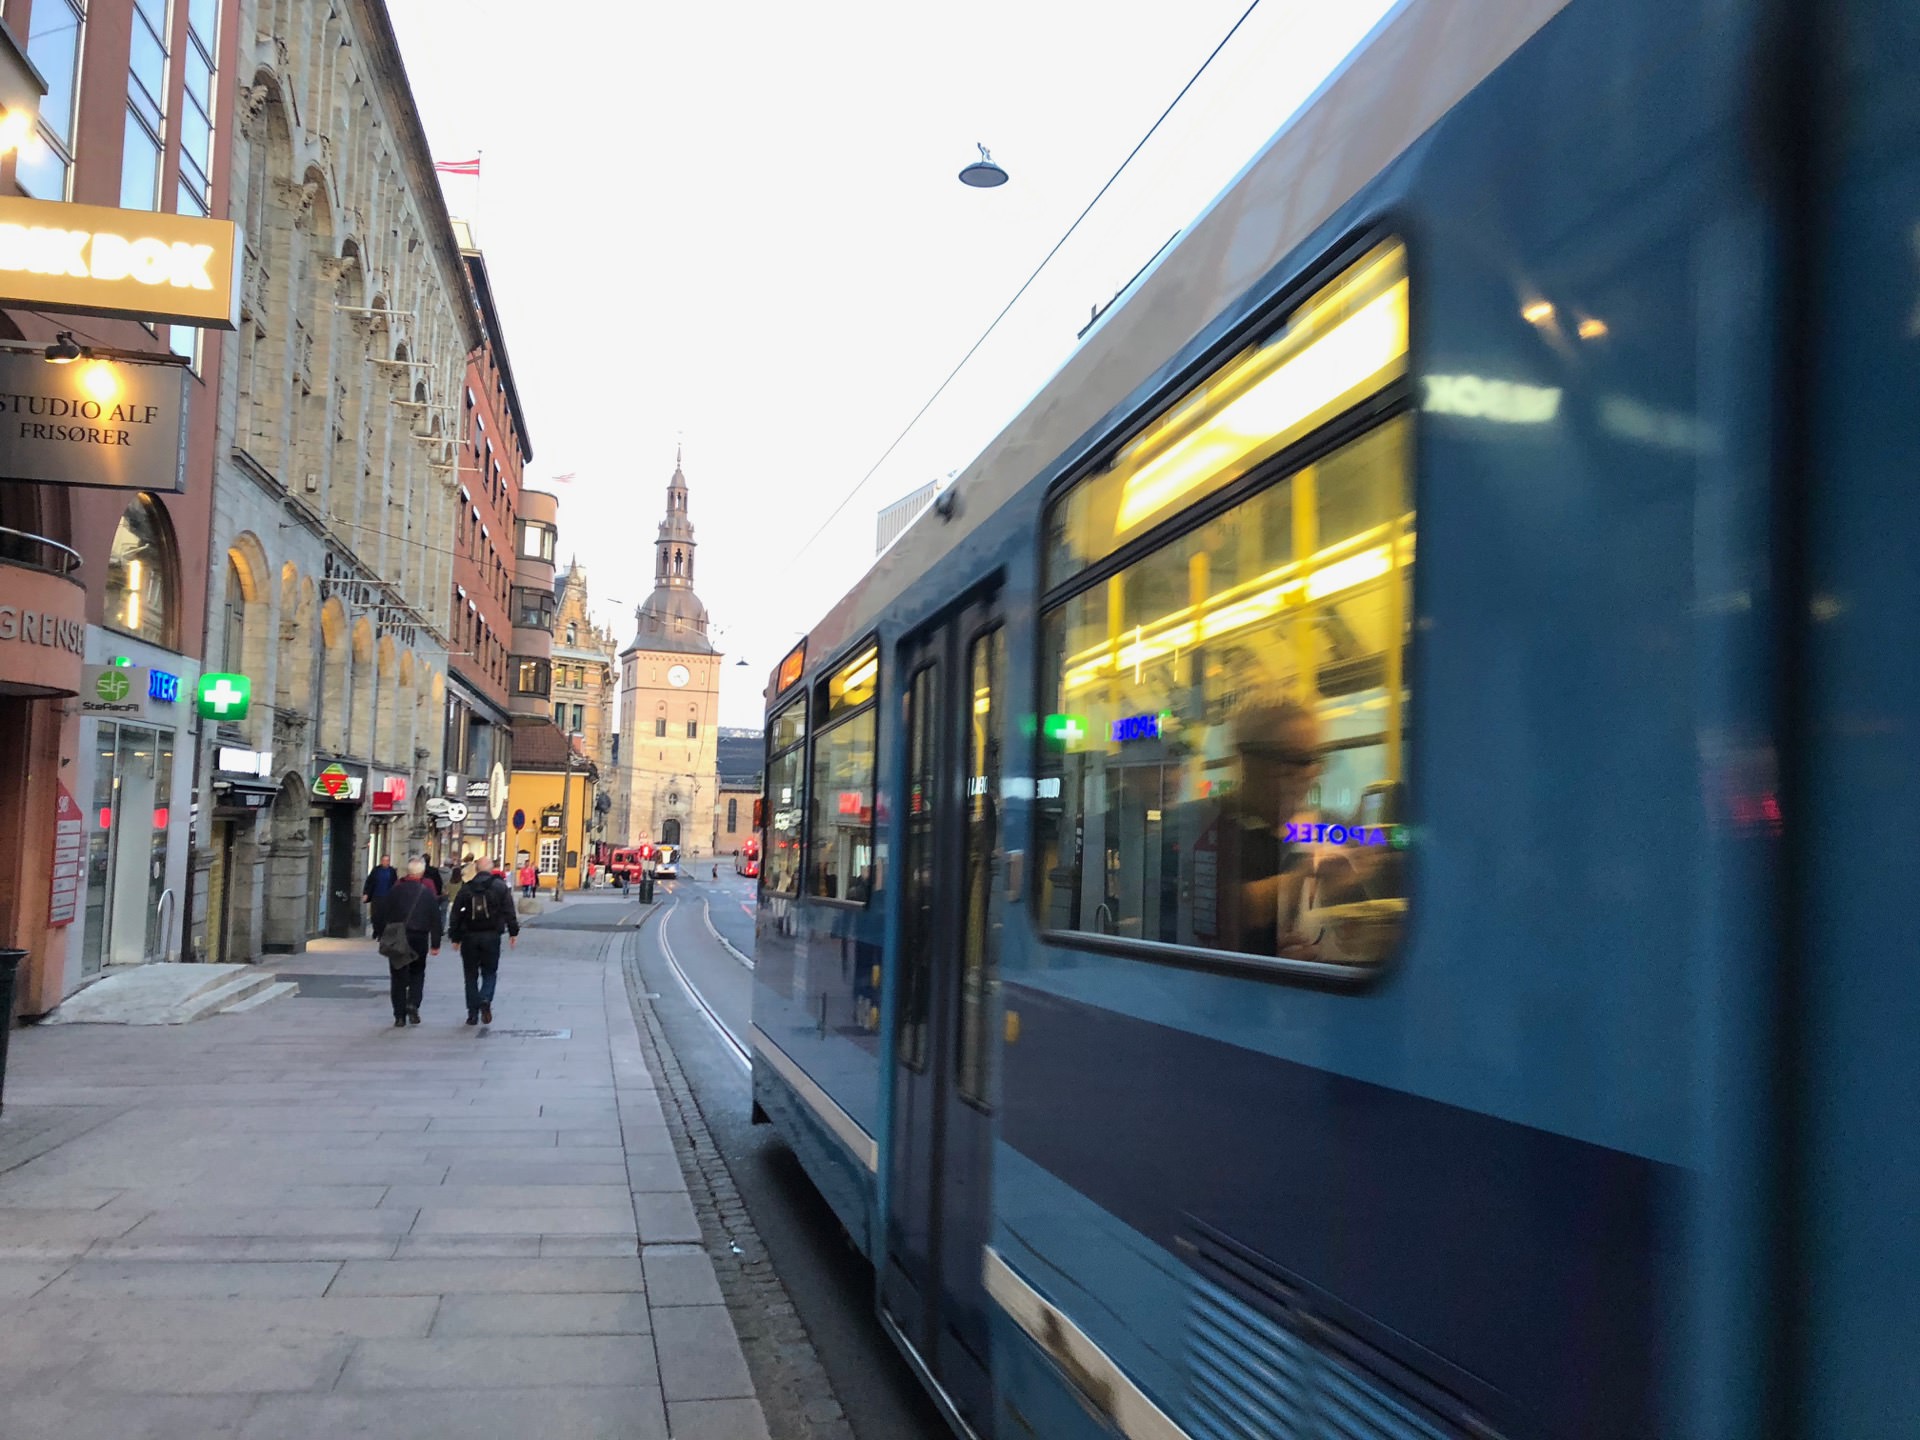 Oslo tram reflections